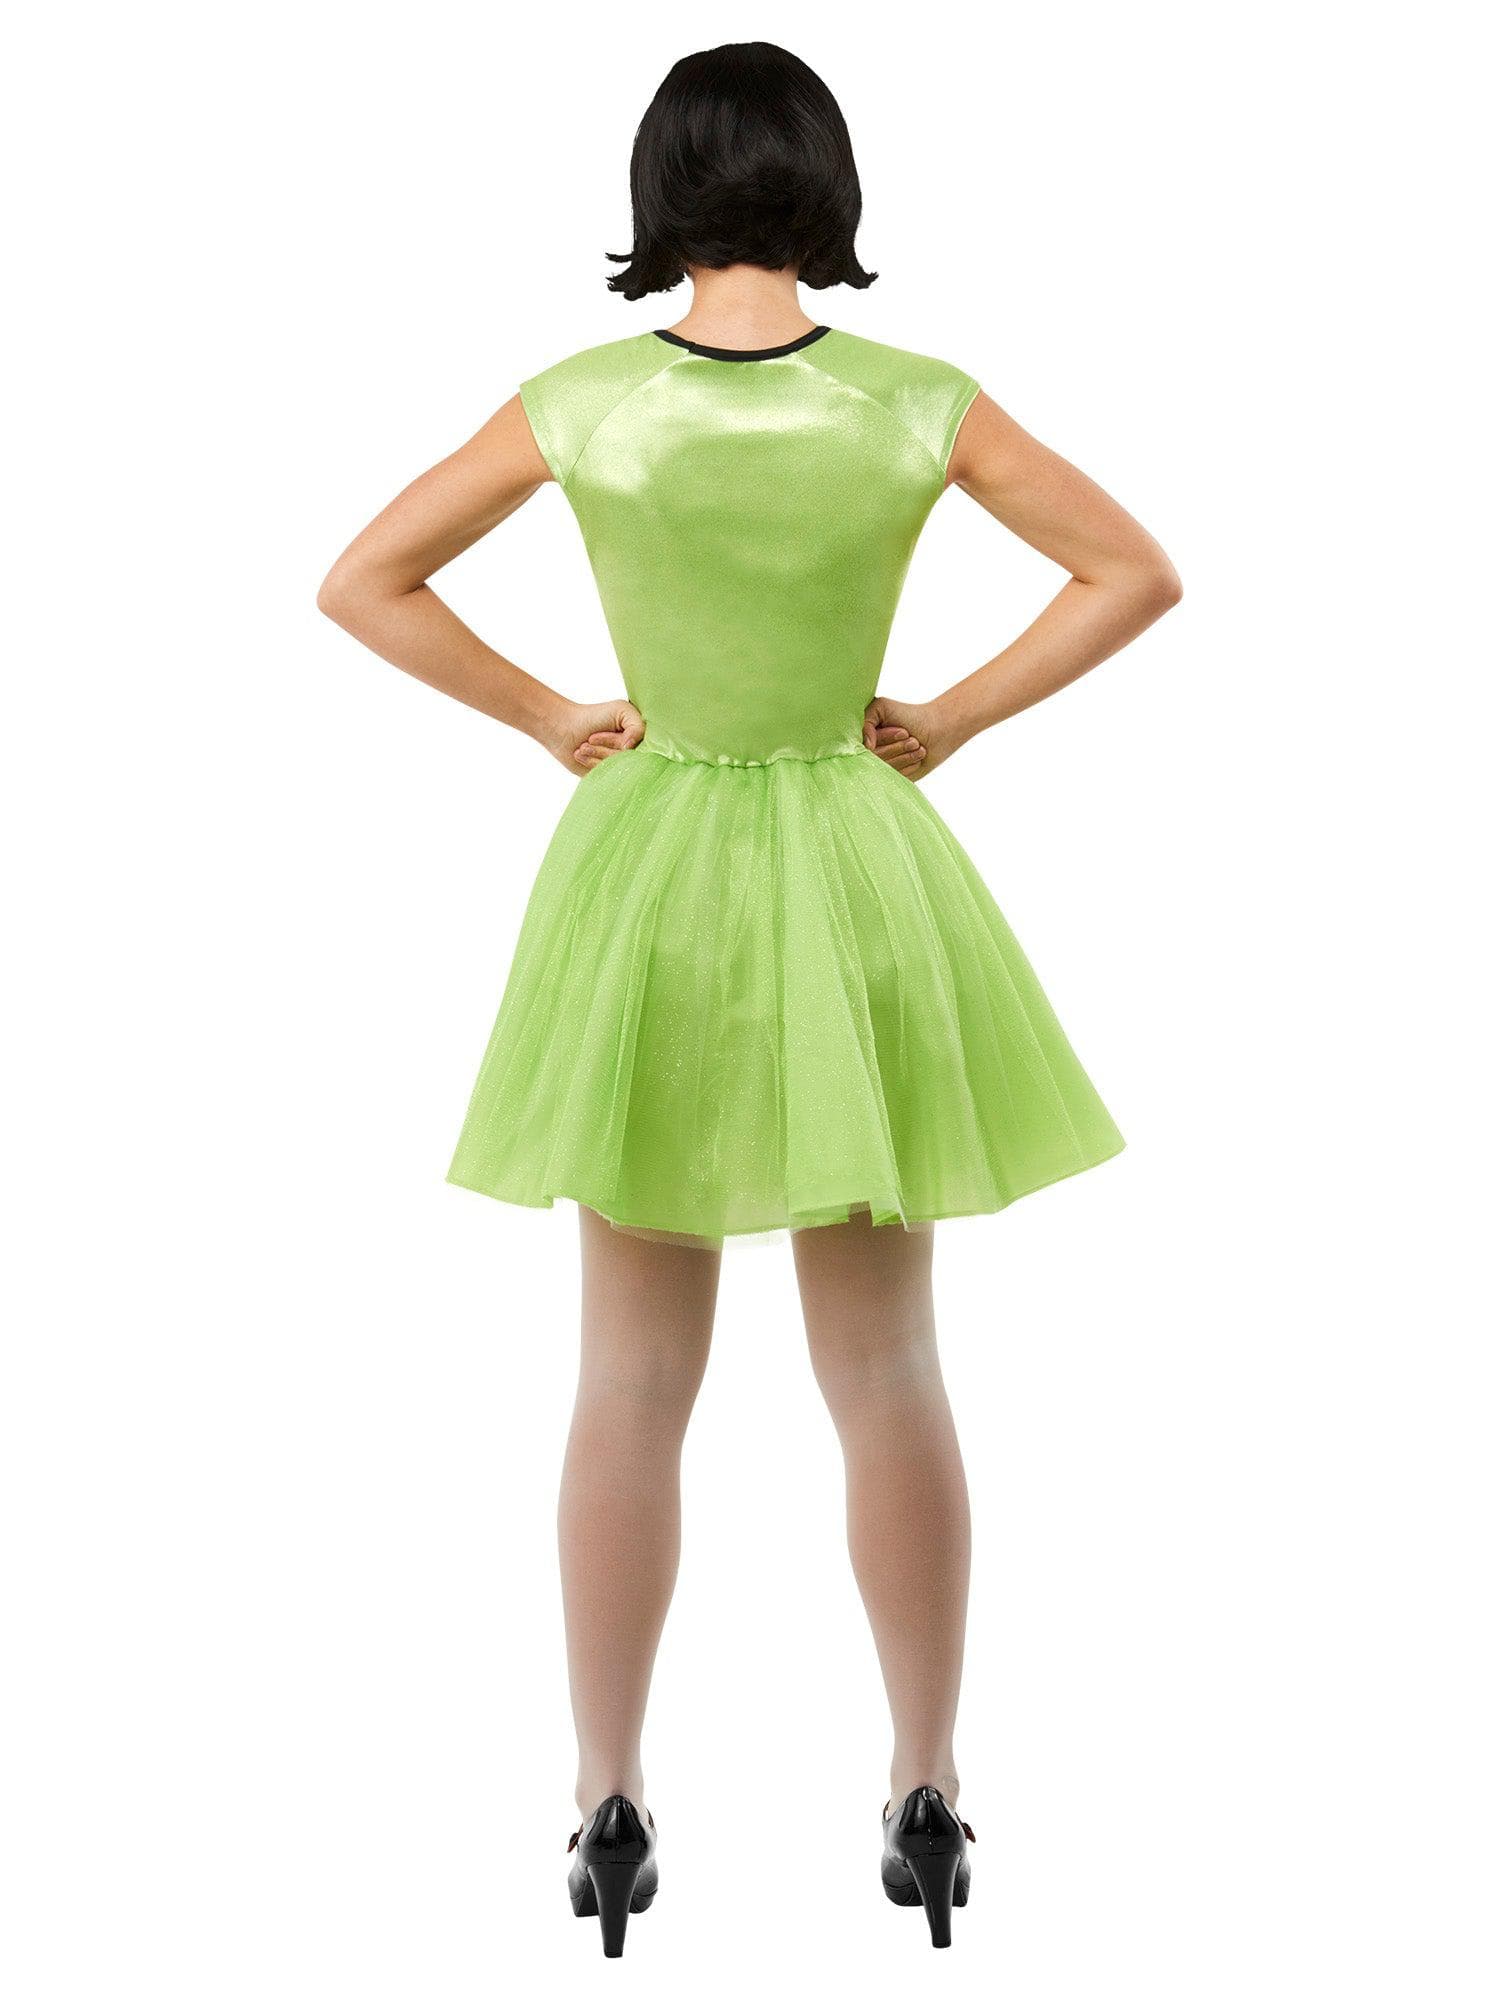 Powerpuff Girls Buttercup Adult Costume - costumes.com